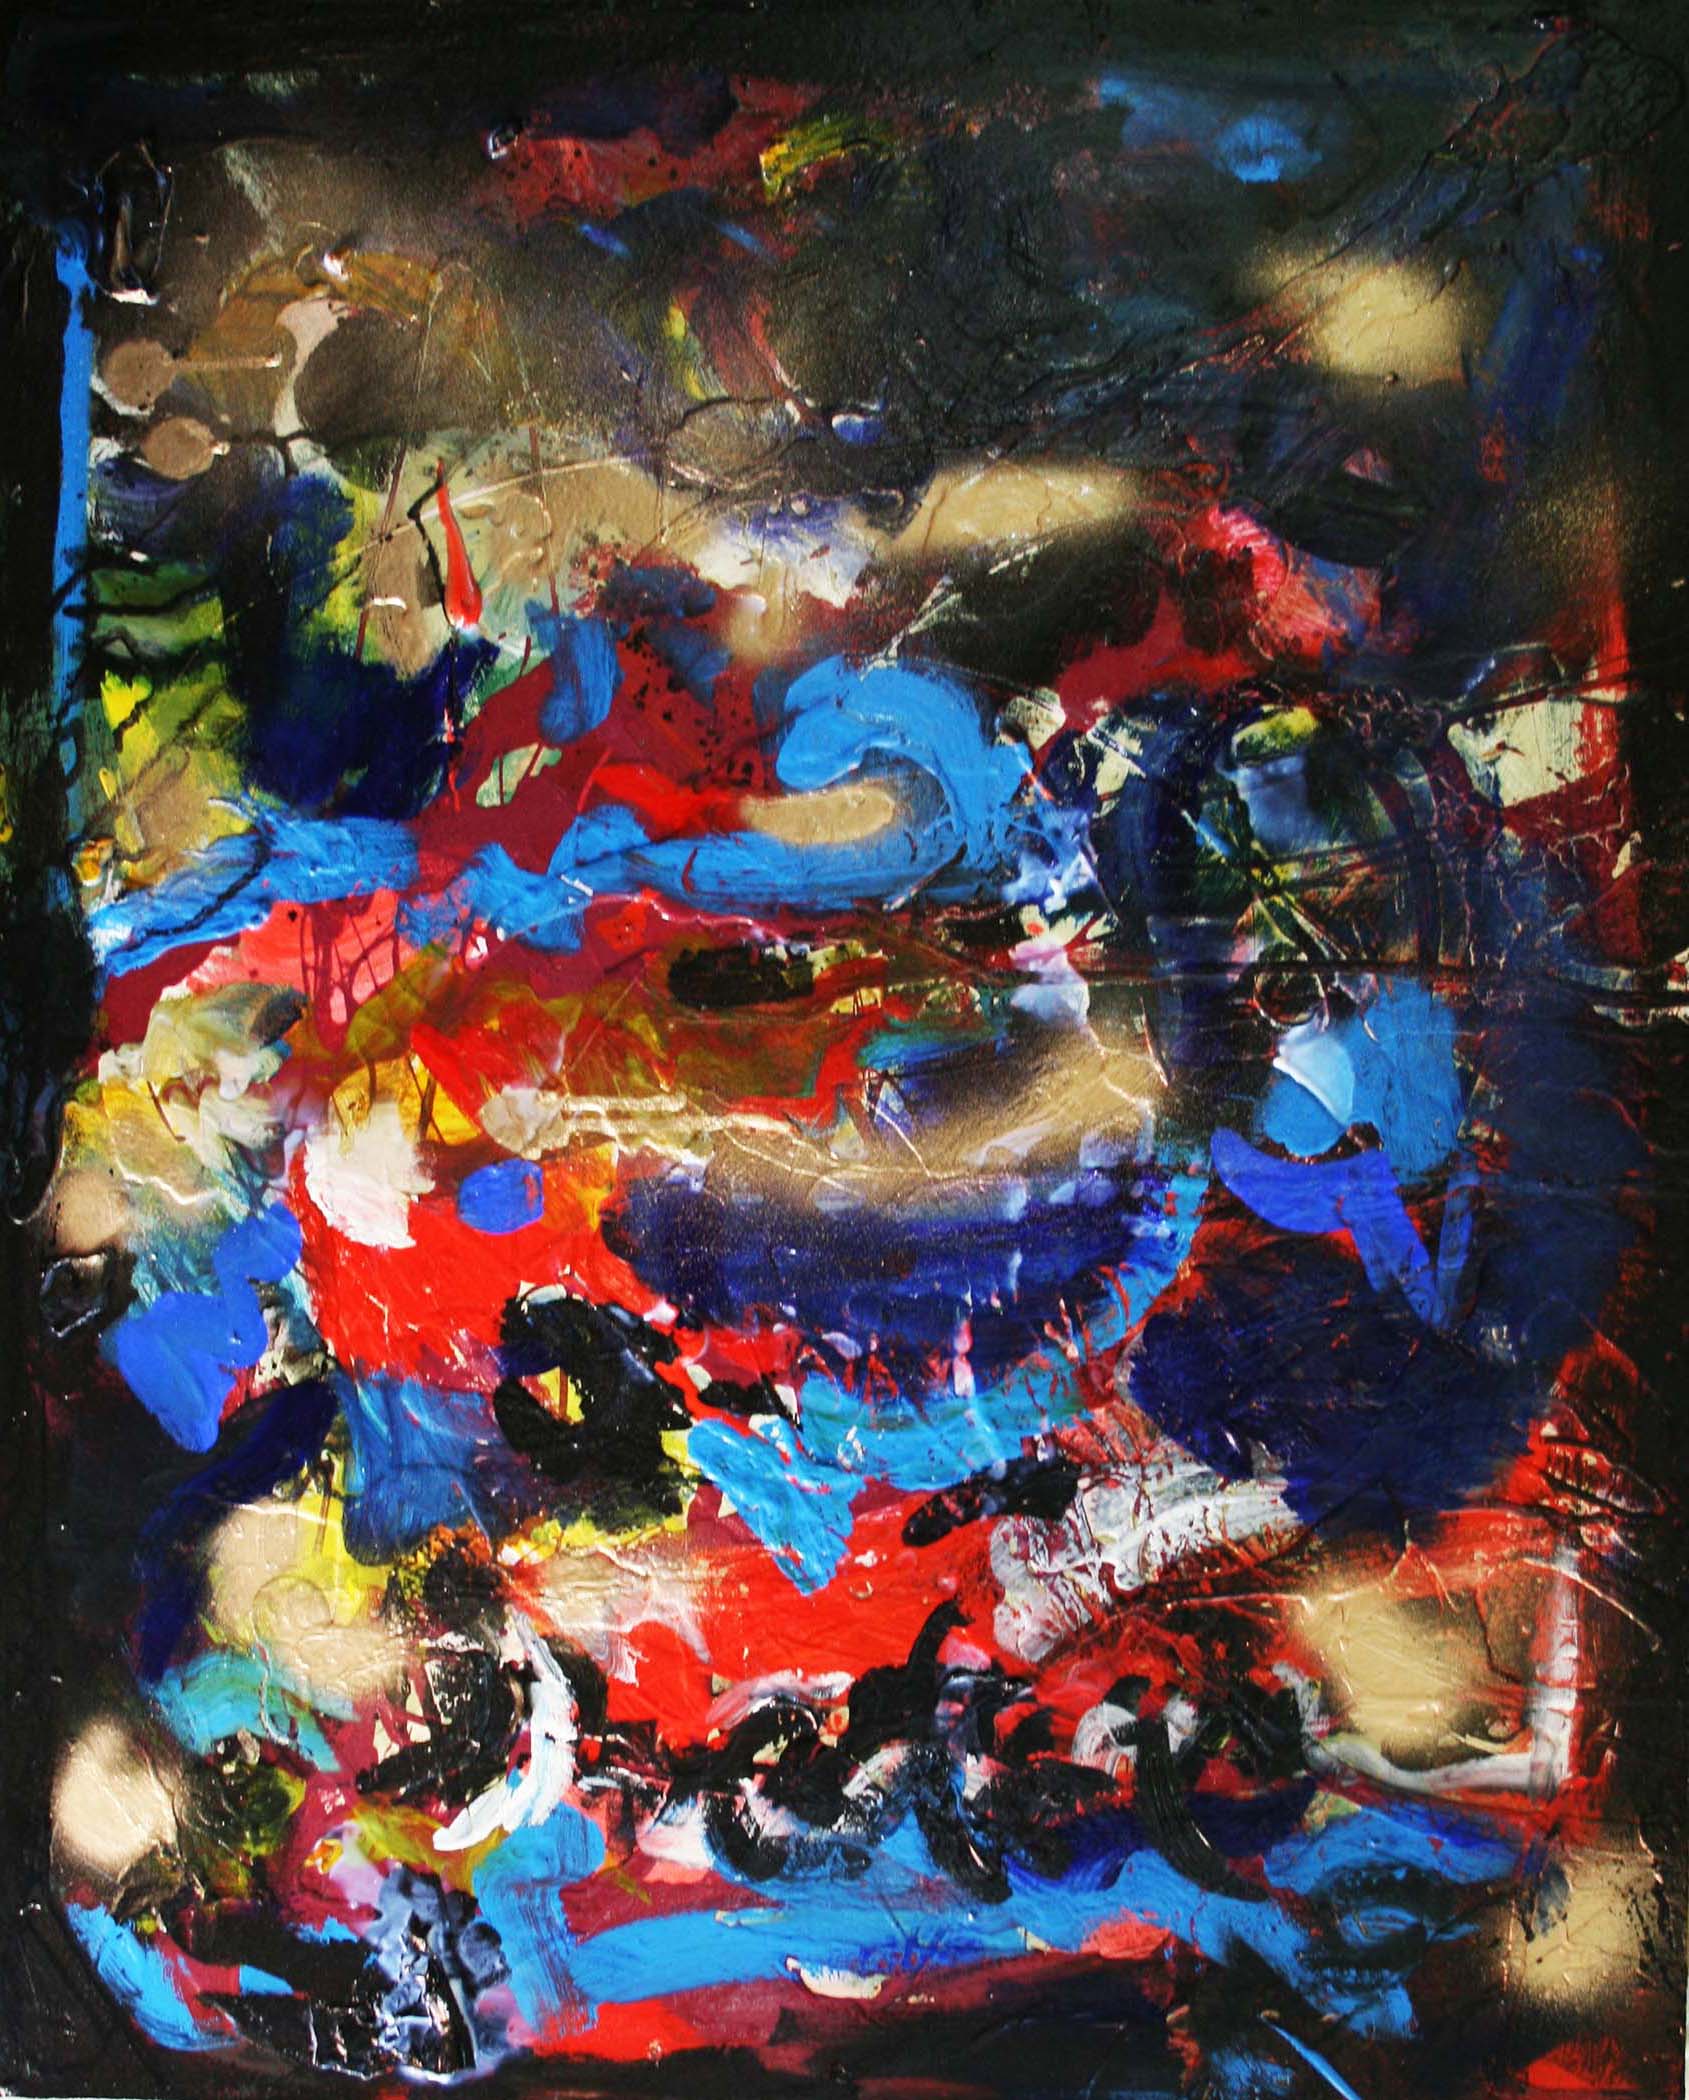 abstract expressionism, willem de kooning,jackson pollock, franz kline, lee krasner, blue, other hans hoffman,